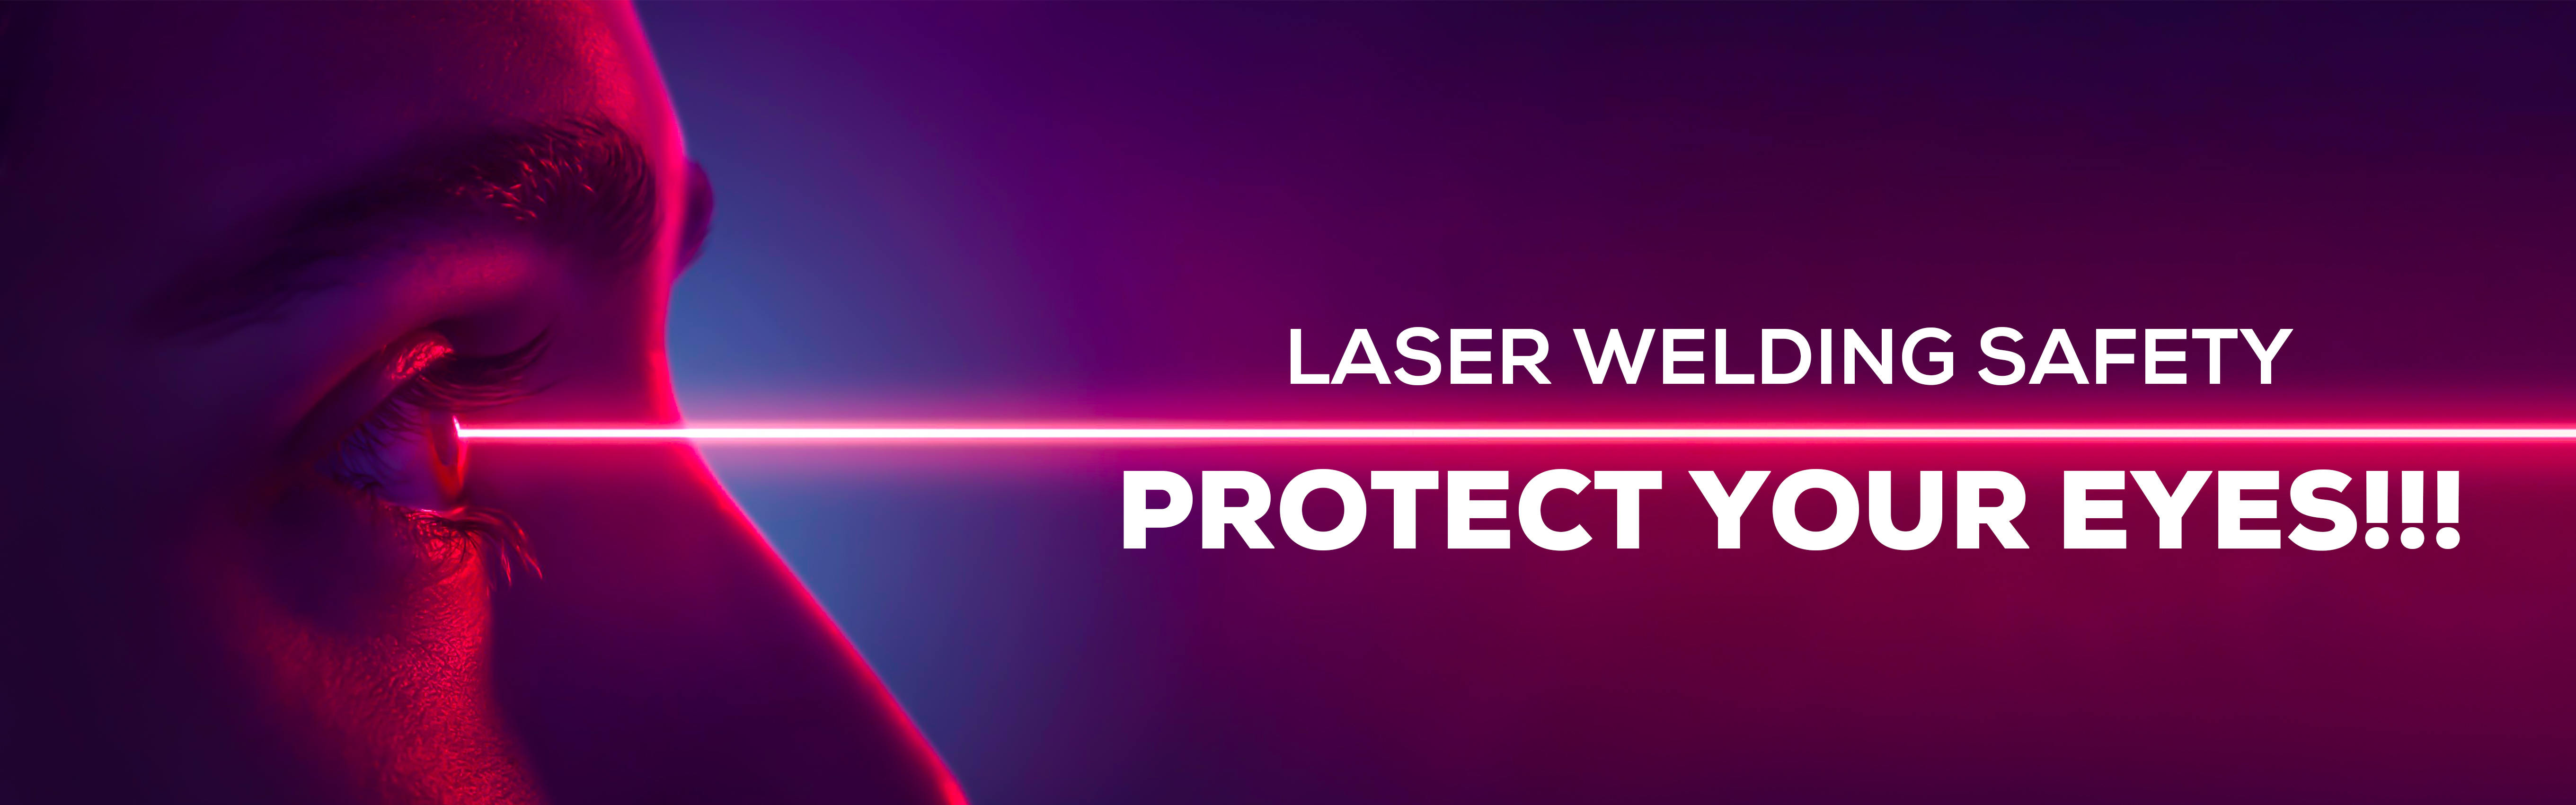 segurança de soldagem a laser